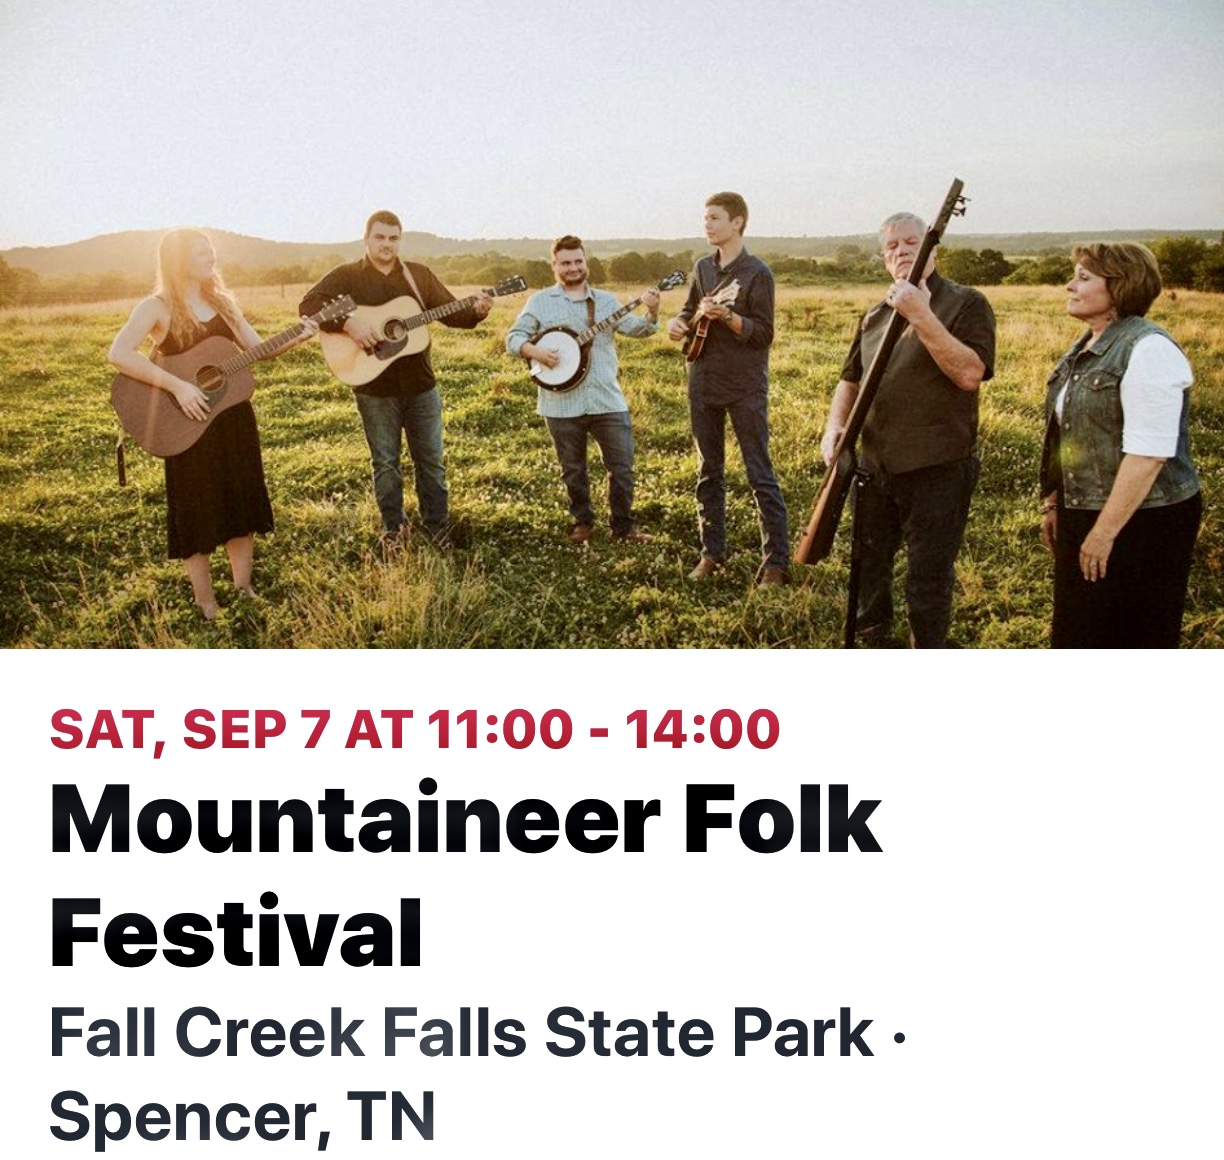 Mountaineer Folk FestivalFall Creek Falls State ParkSeptember 7, 2019